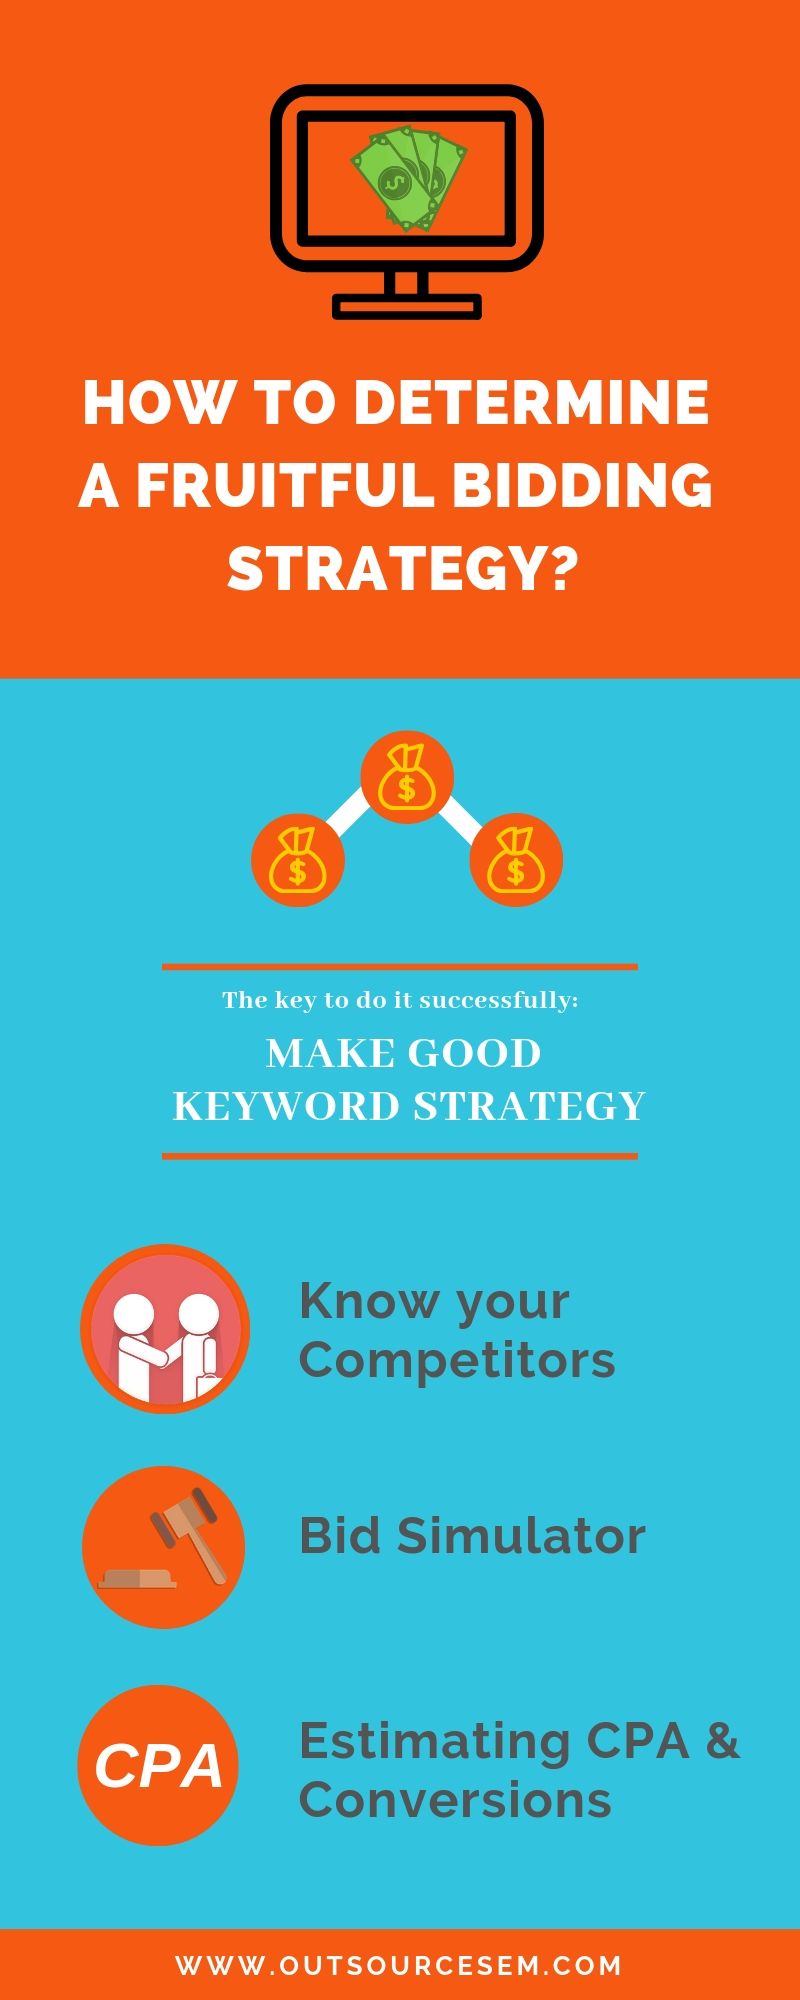 3 advanced keyword bidding strategies